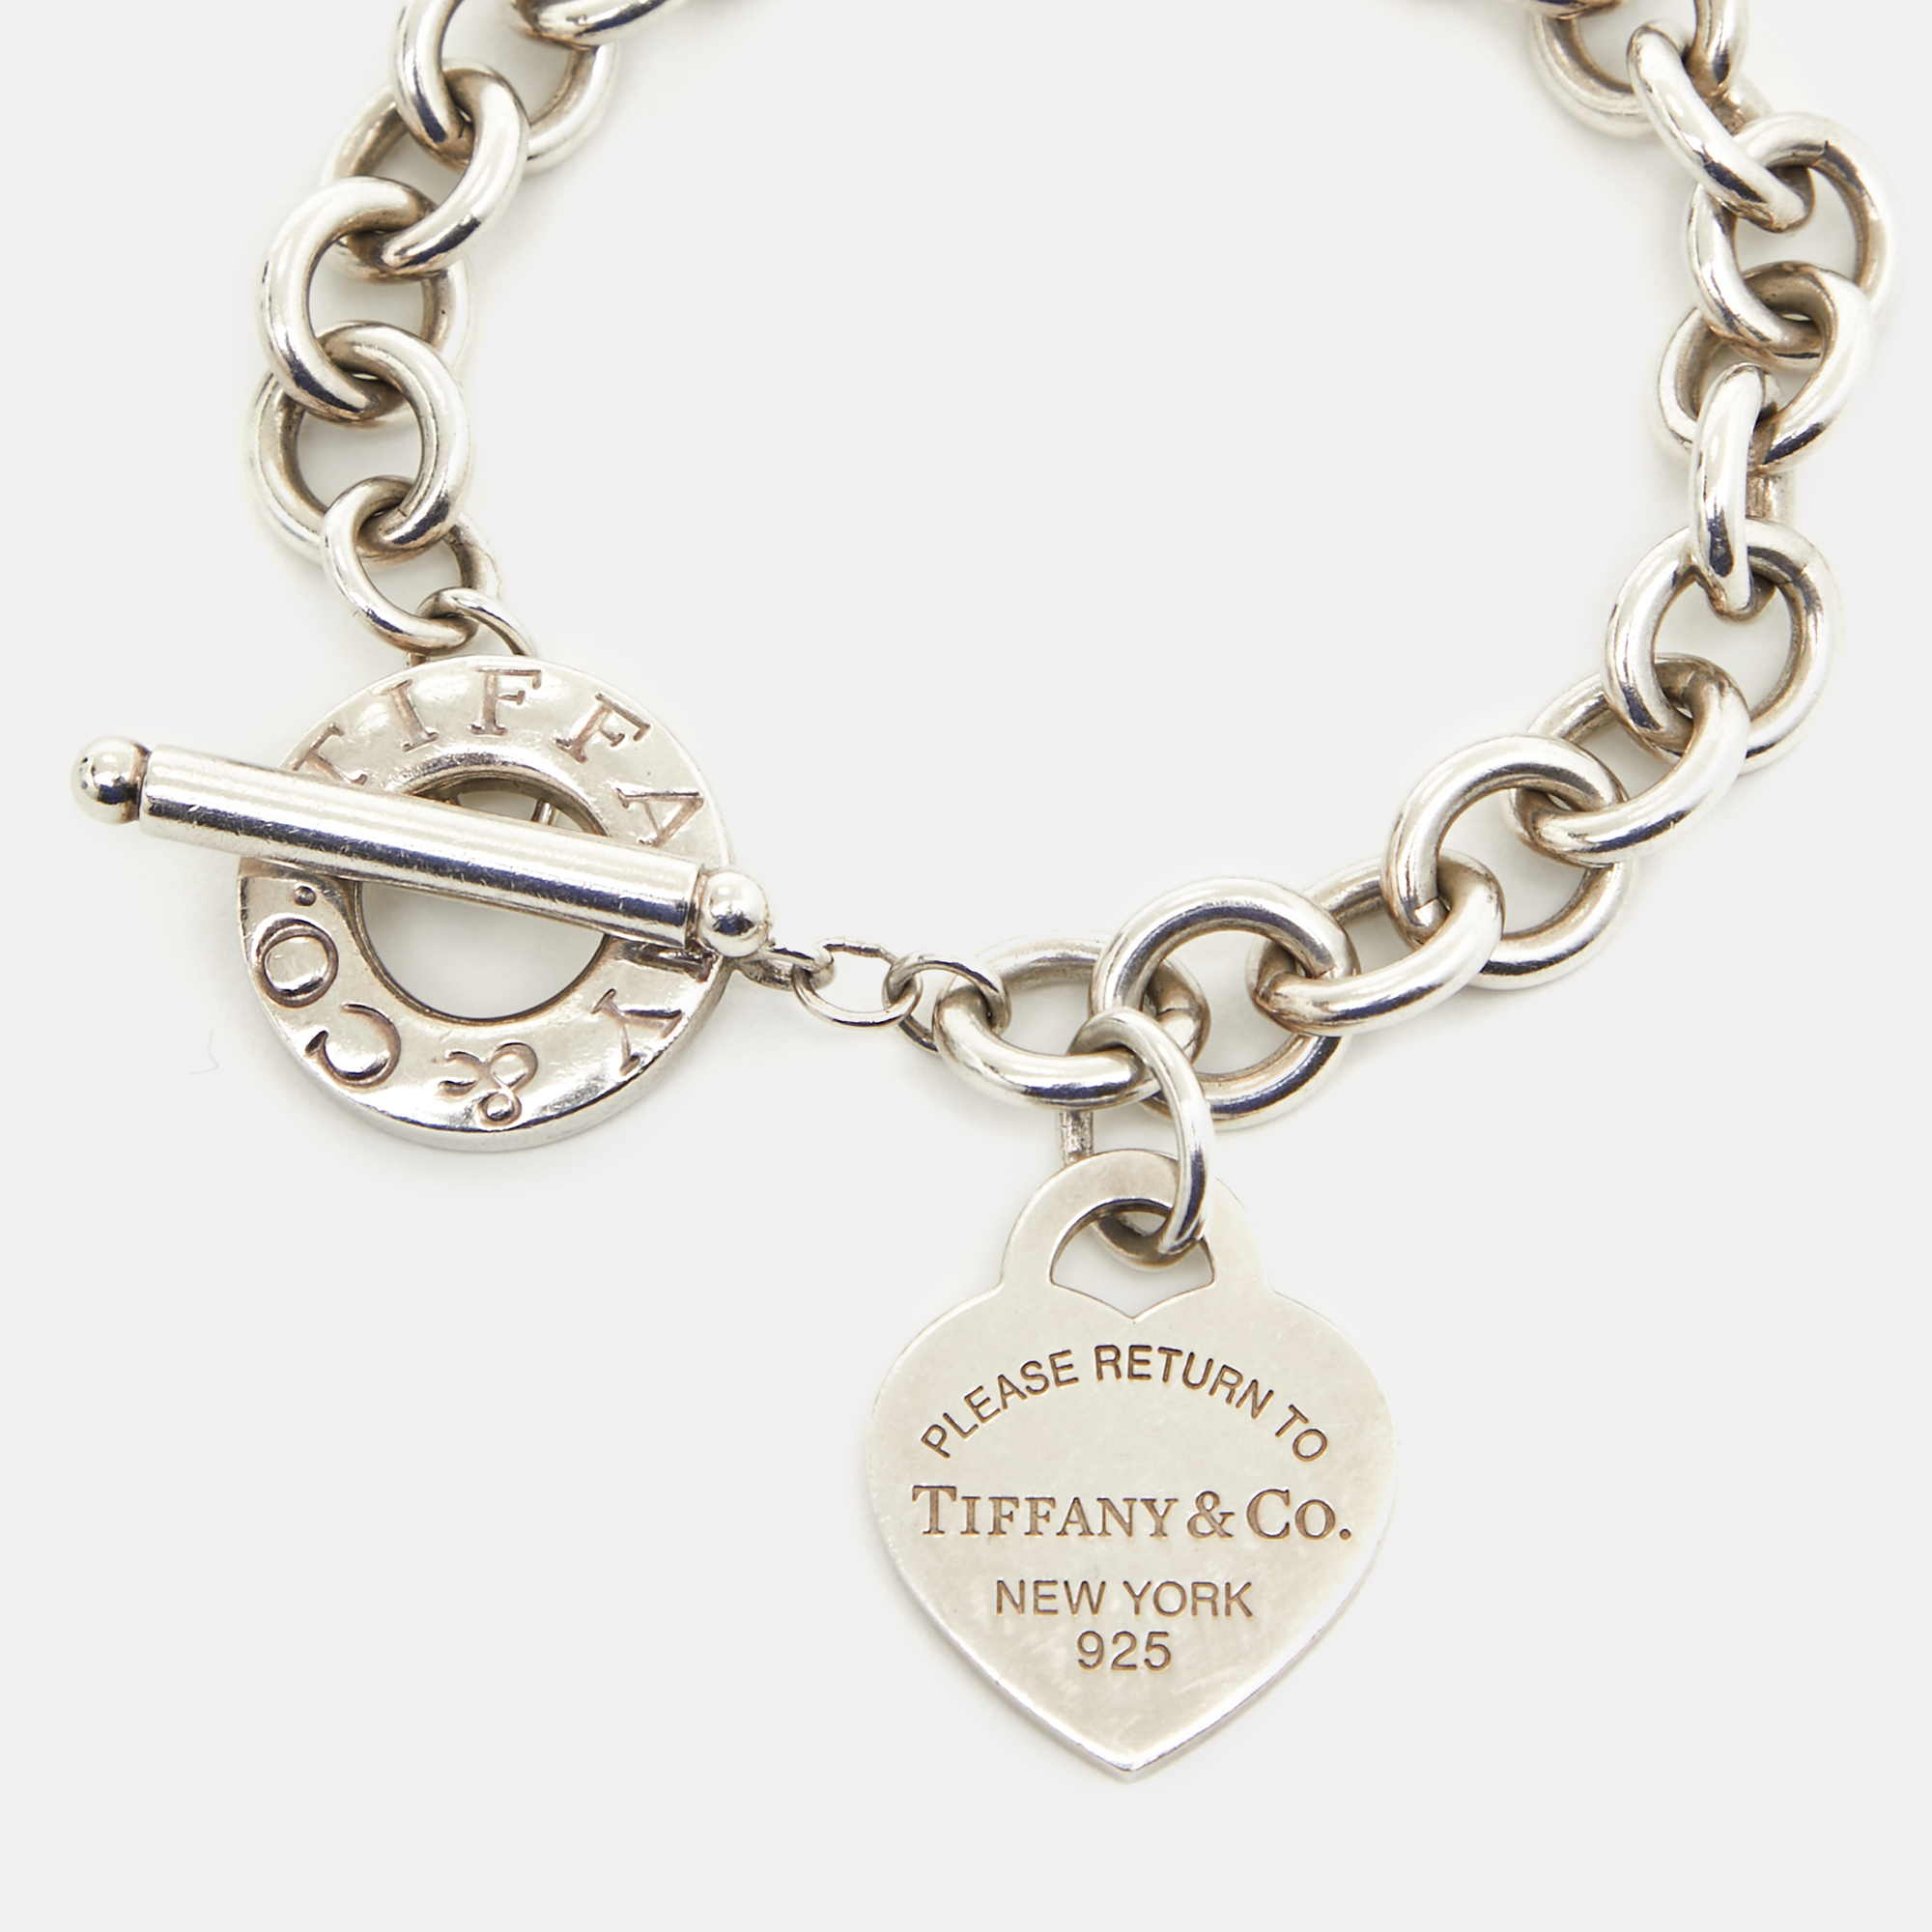 

Tiffany & Co. Return to Tiffany Sterling Silver Toggle Bracelet